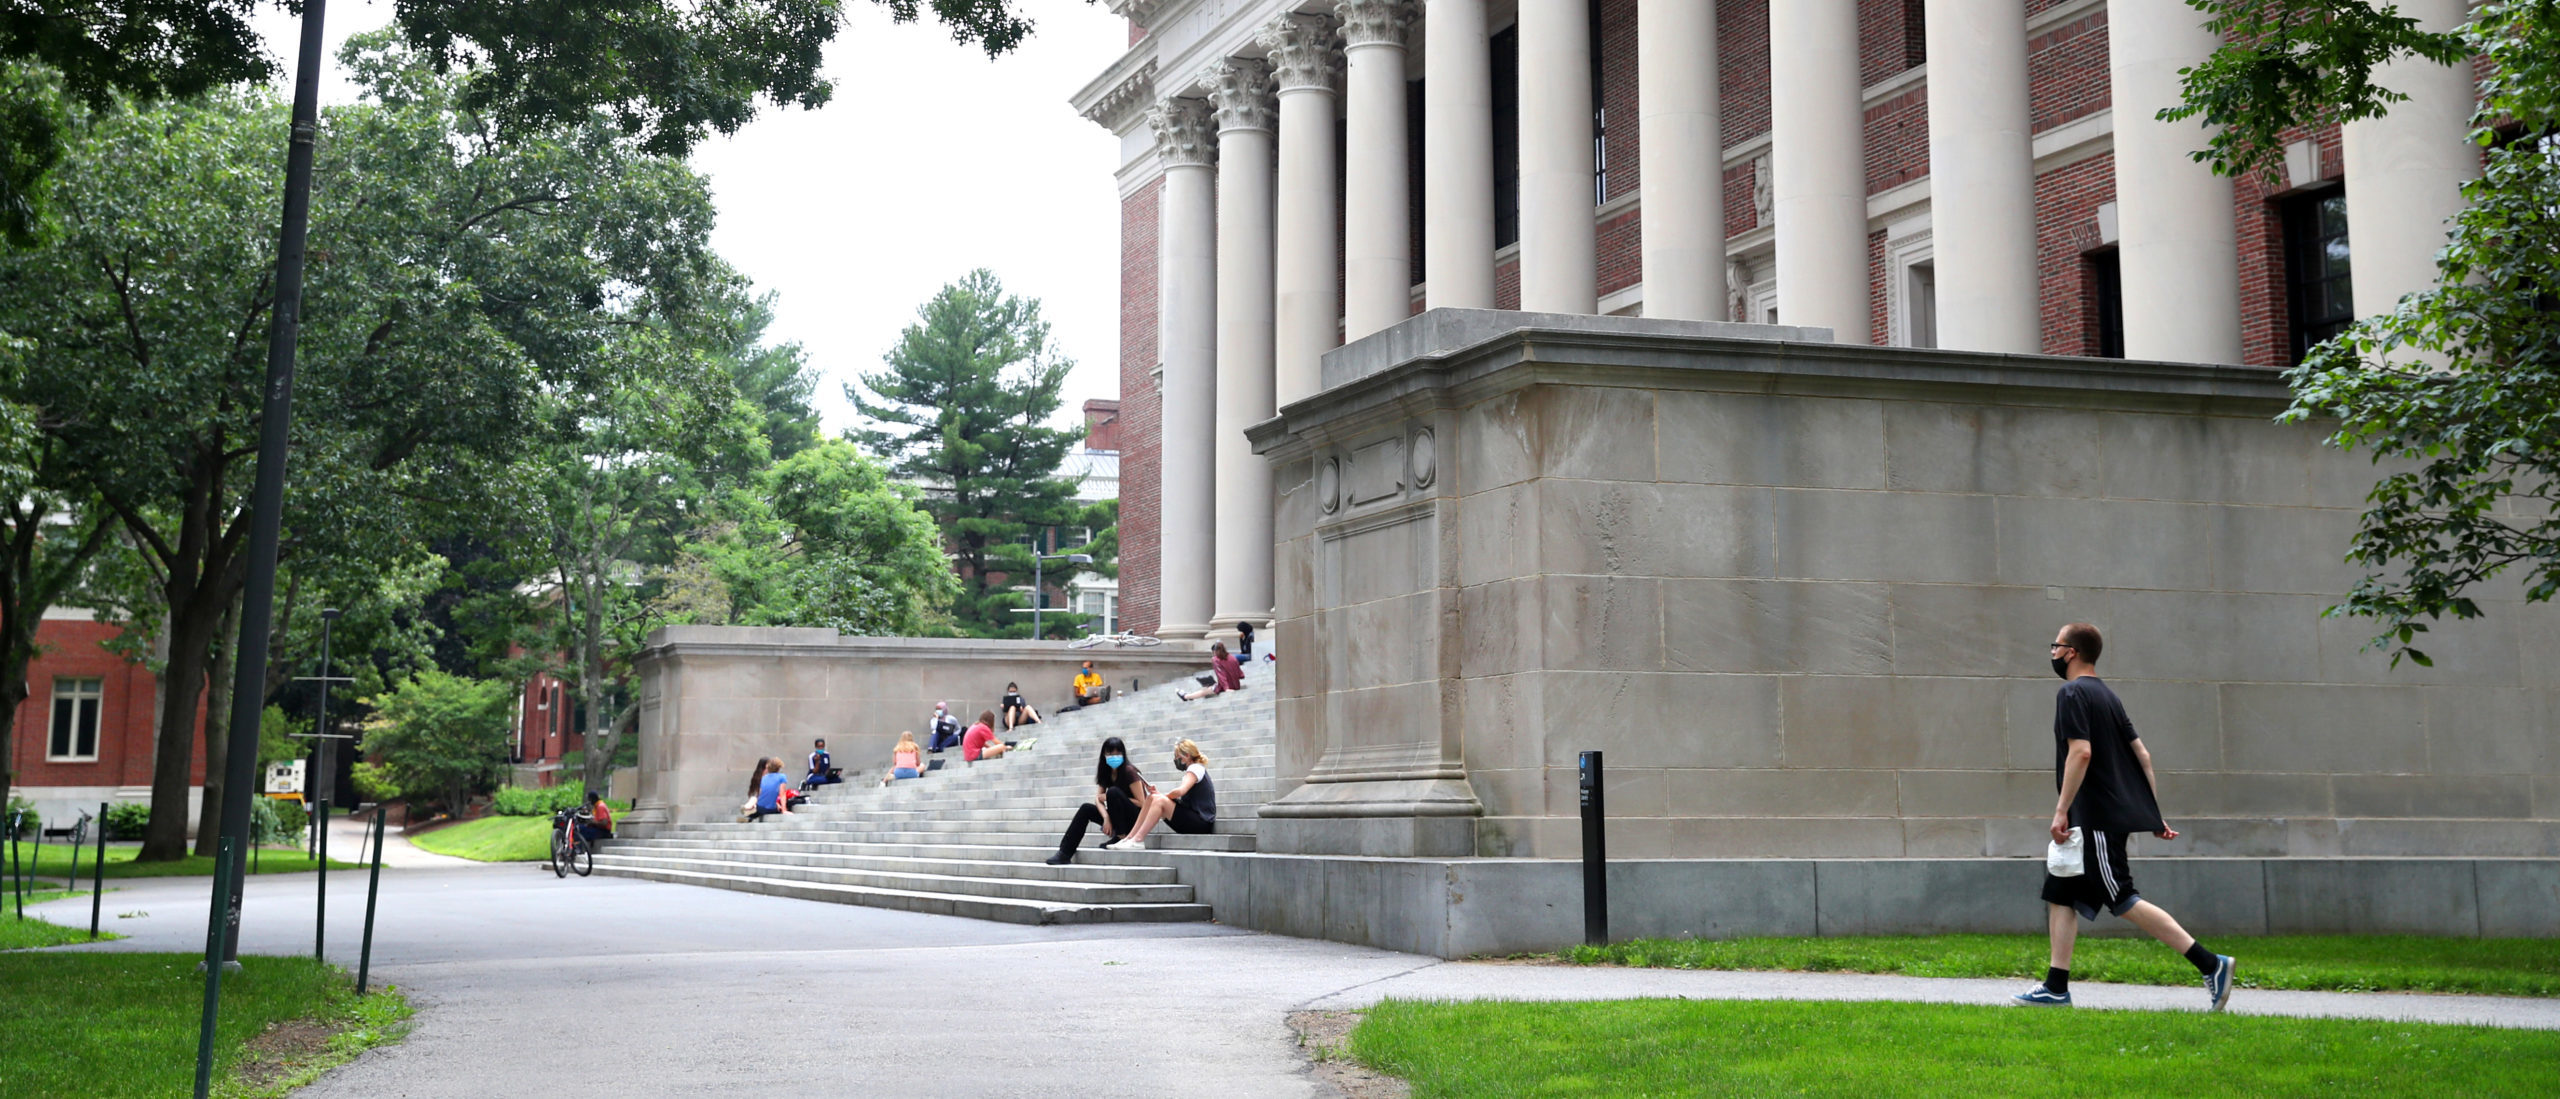 A view of Harvard Yard on the campus of Harvard University on July 08, 2020 in Cambridge, Massachusetts.